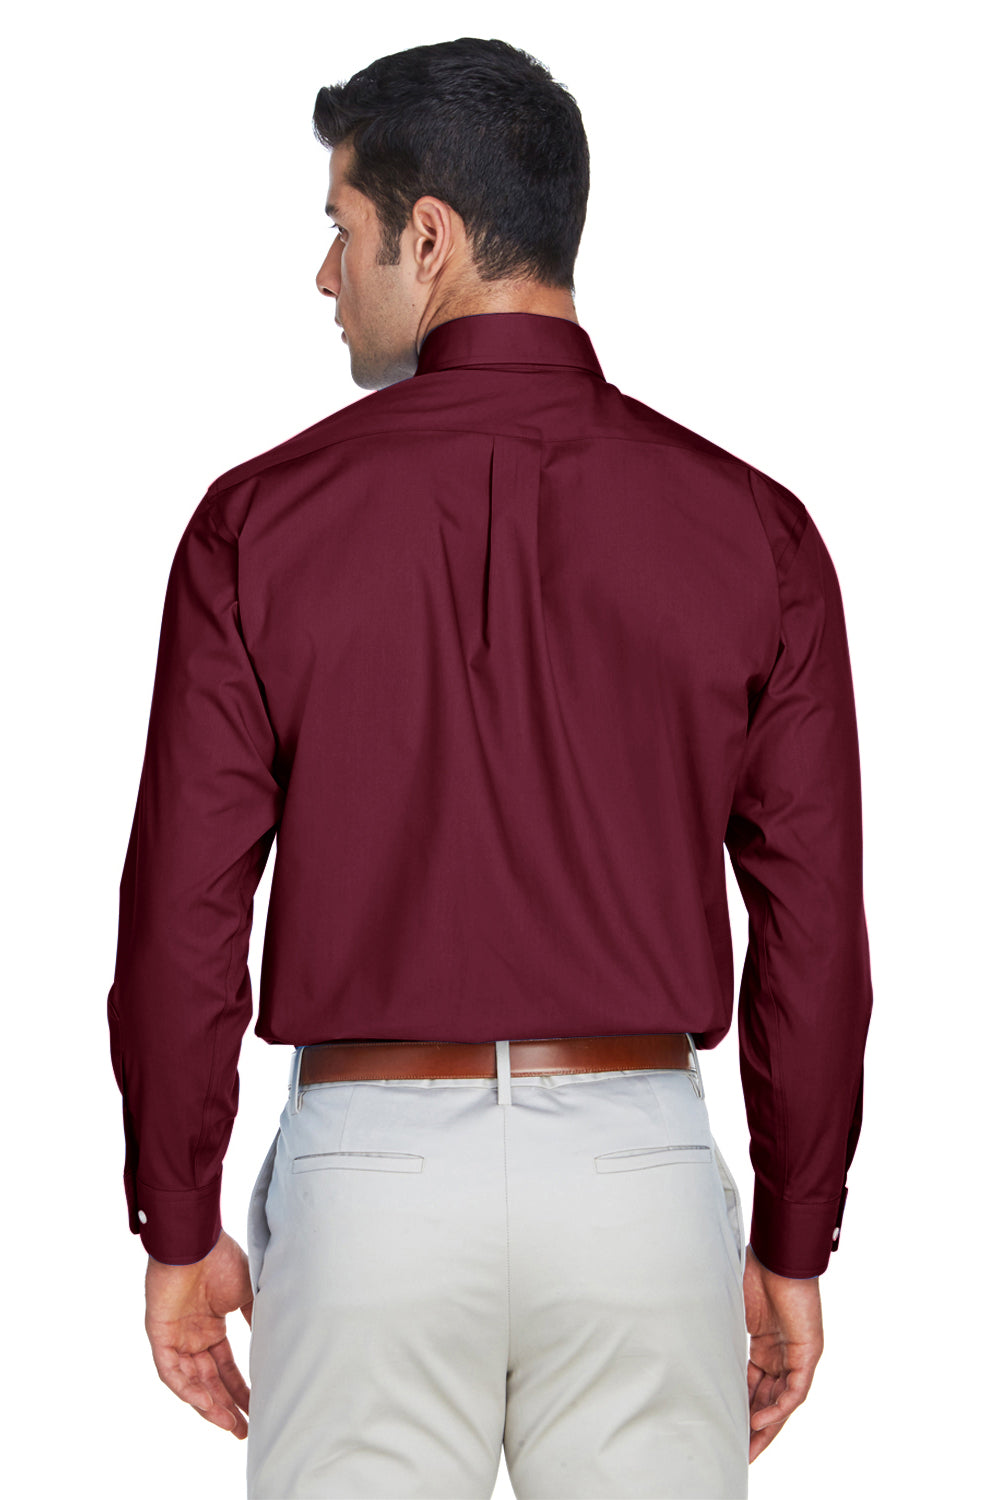 Devon & Jones D620 Mens Crown Woven Collection Wrinkle Resistant Long Sleeve Button Down Shirt w/ Pocket Burgundy Back